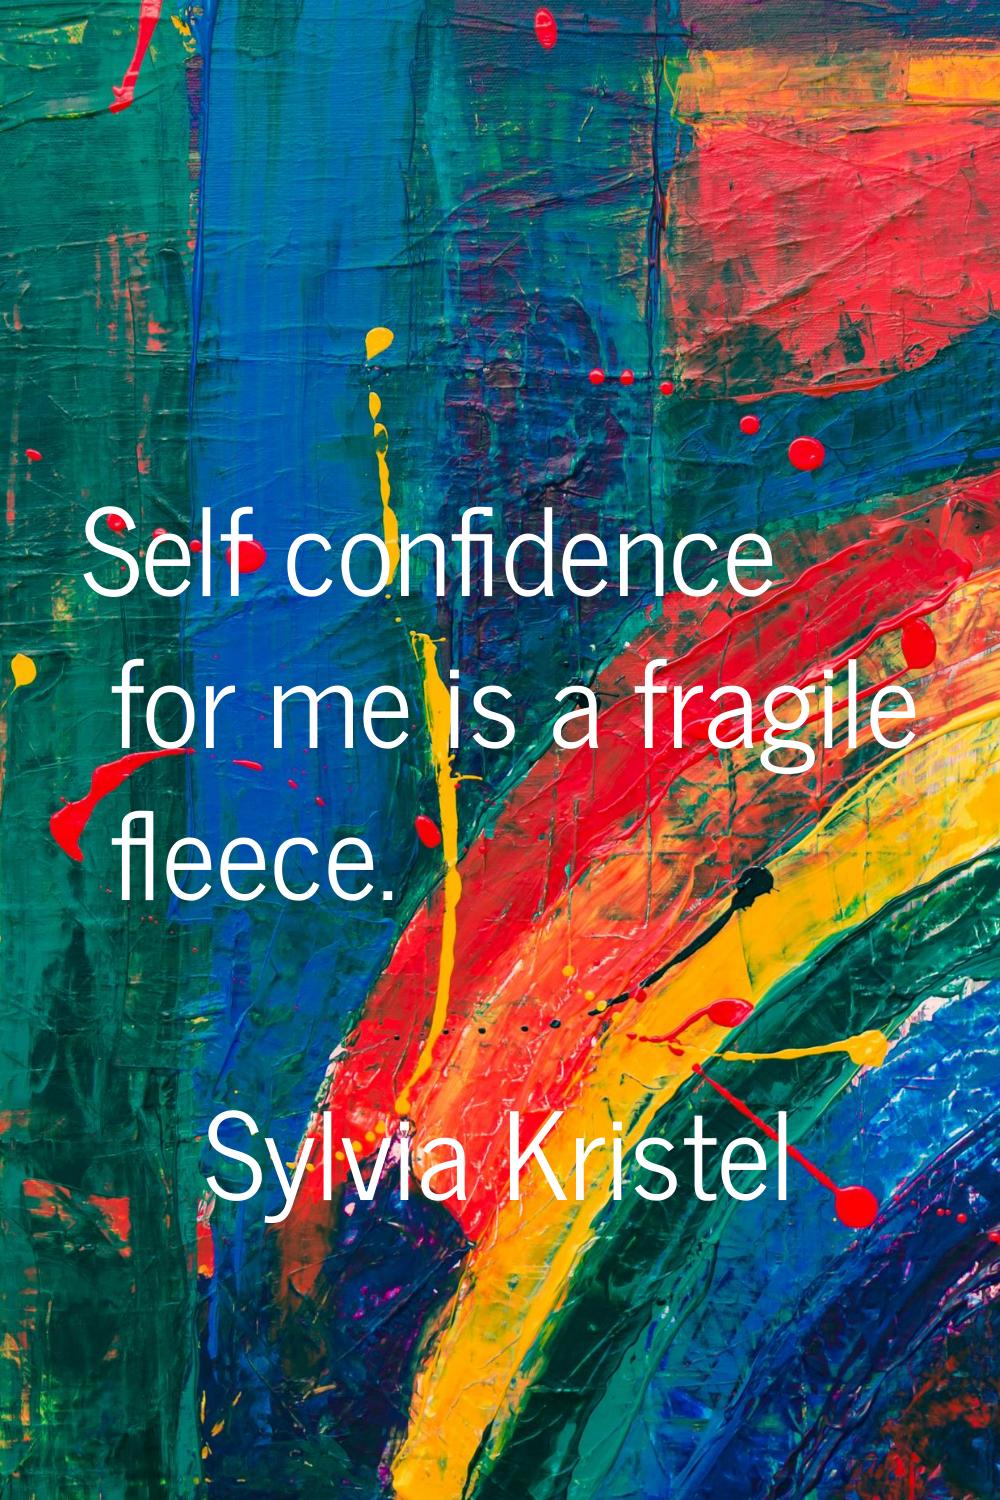 Self confidence for me is a fragile fleece.